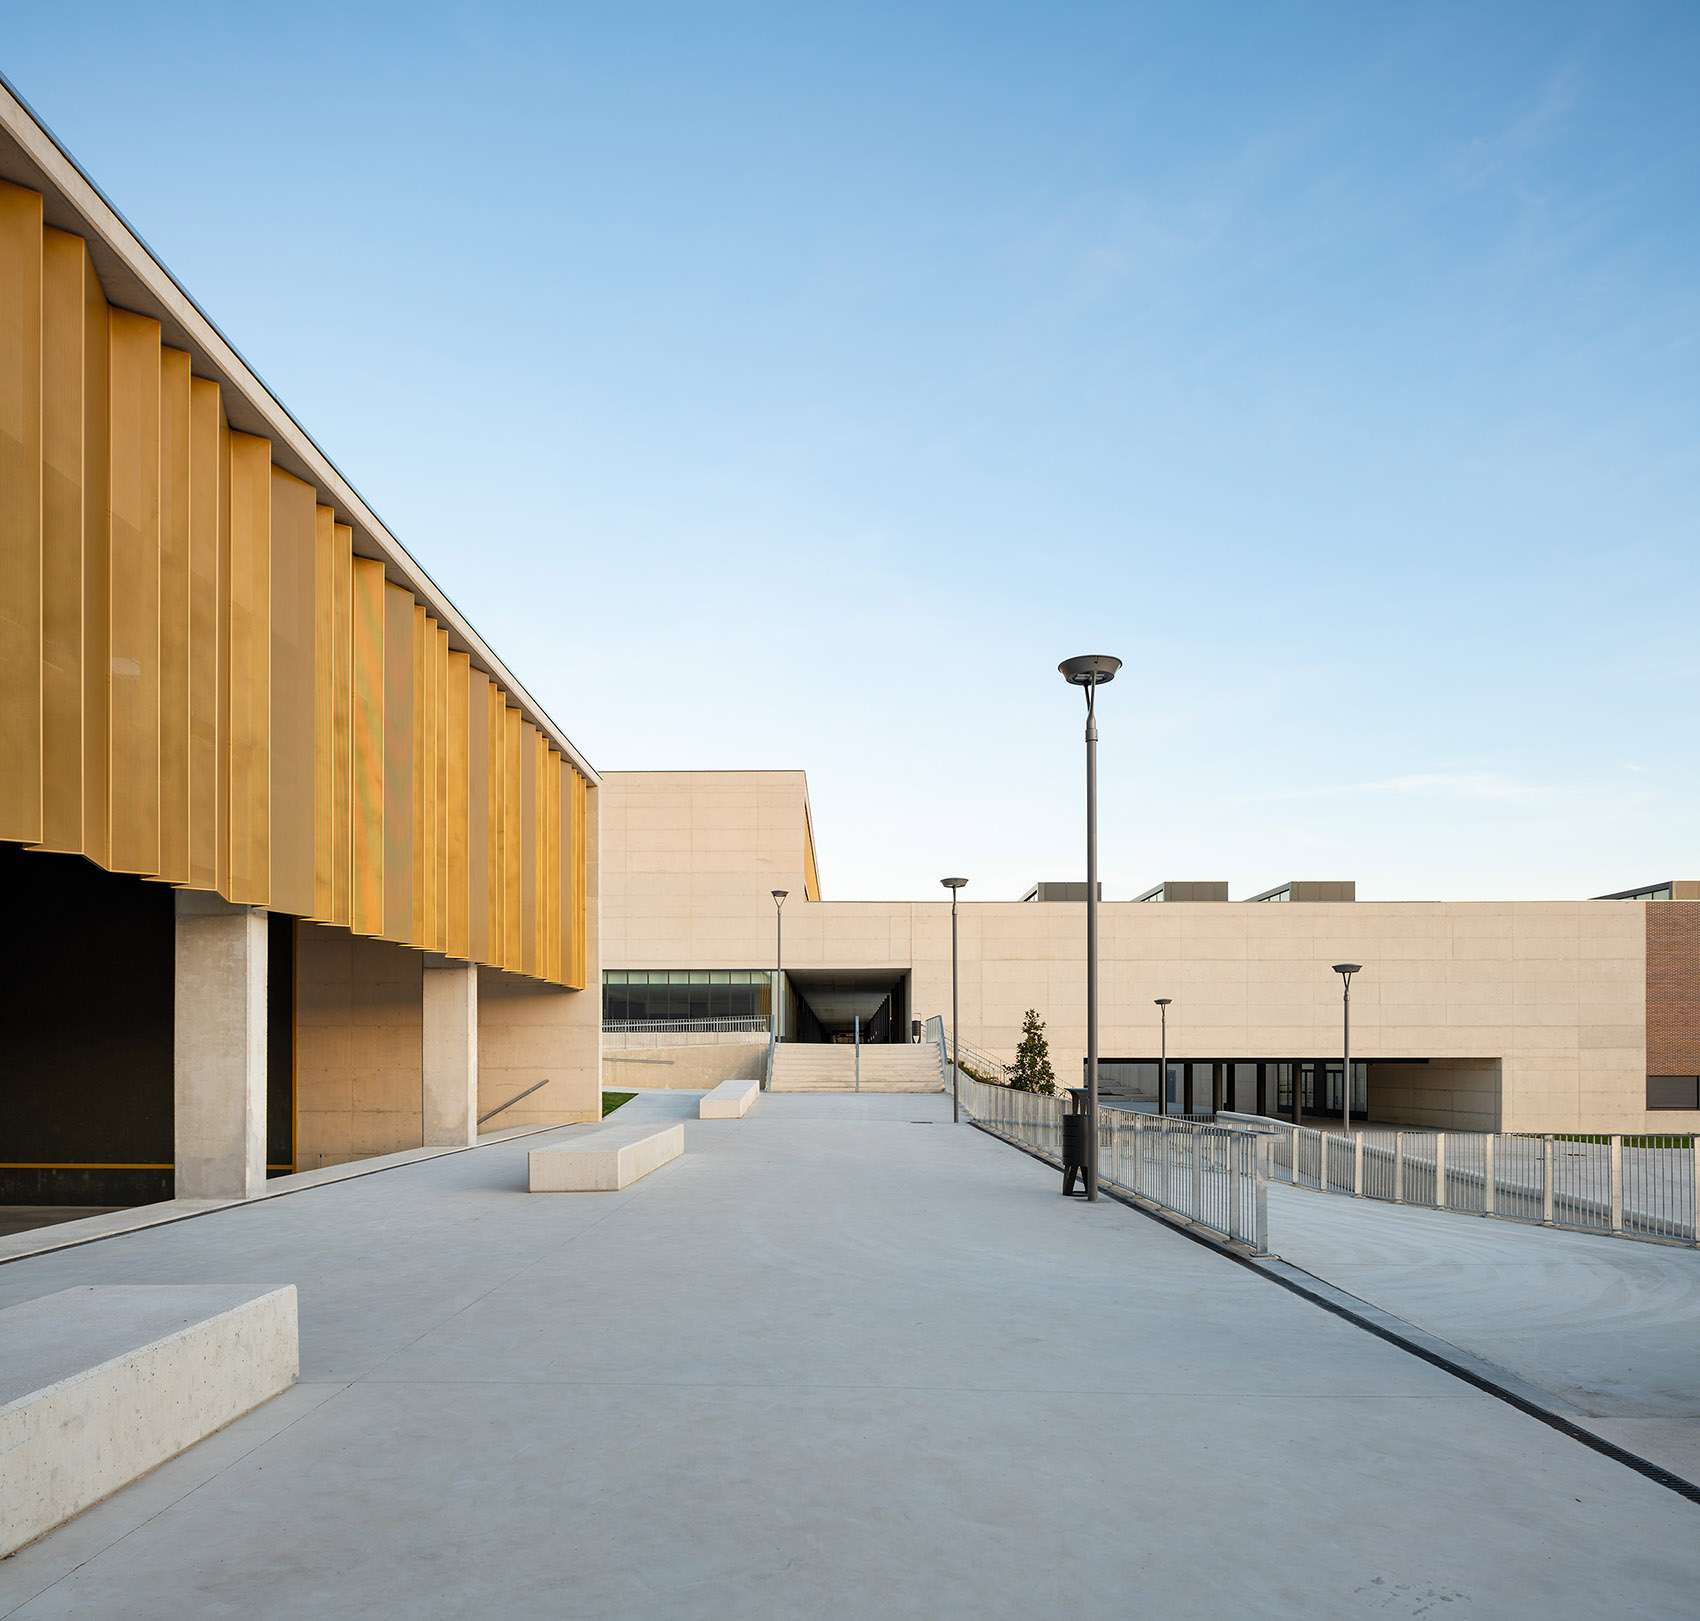 Salesianos Pamplona工艺学校，西班牙/体块与空地交错形成丰富空间体验-28